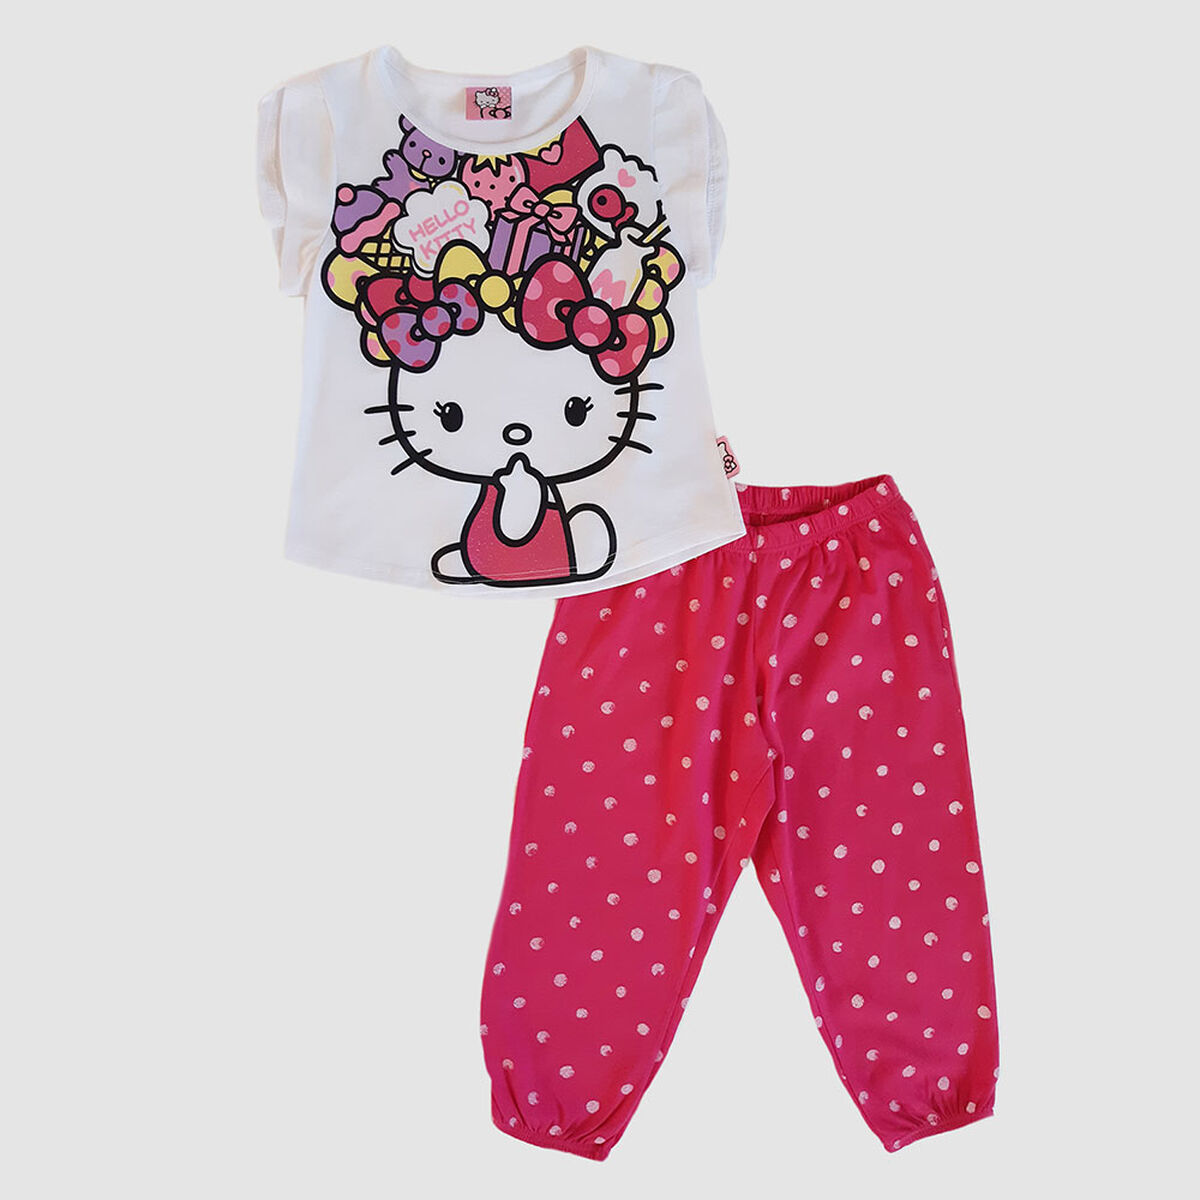 Pijama Niña Hello Kitty en laPolar.cl